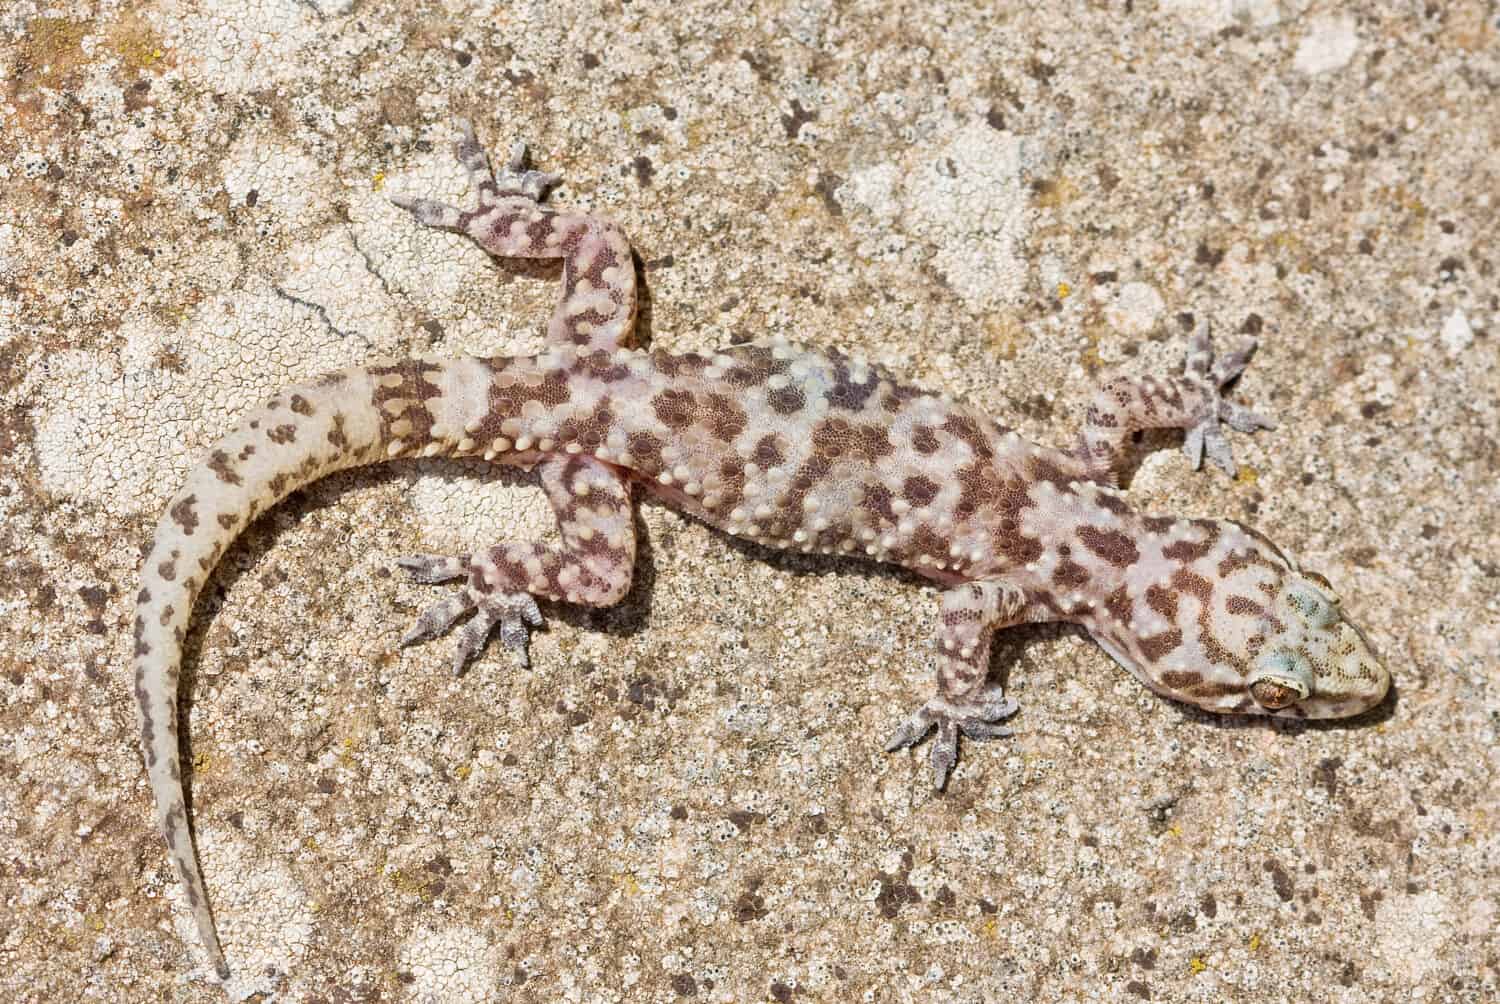 Mediterranean house gecko Hemidactylus turcicus on wall